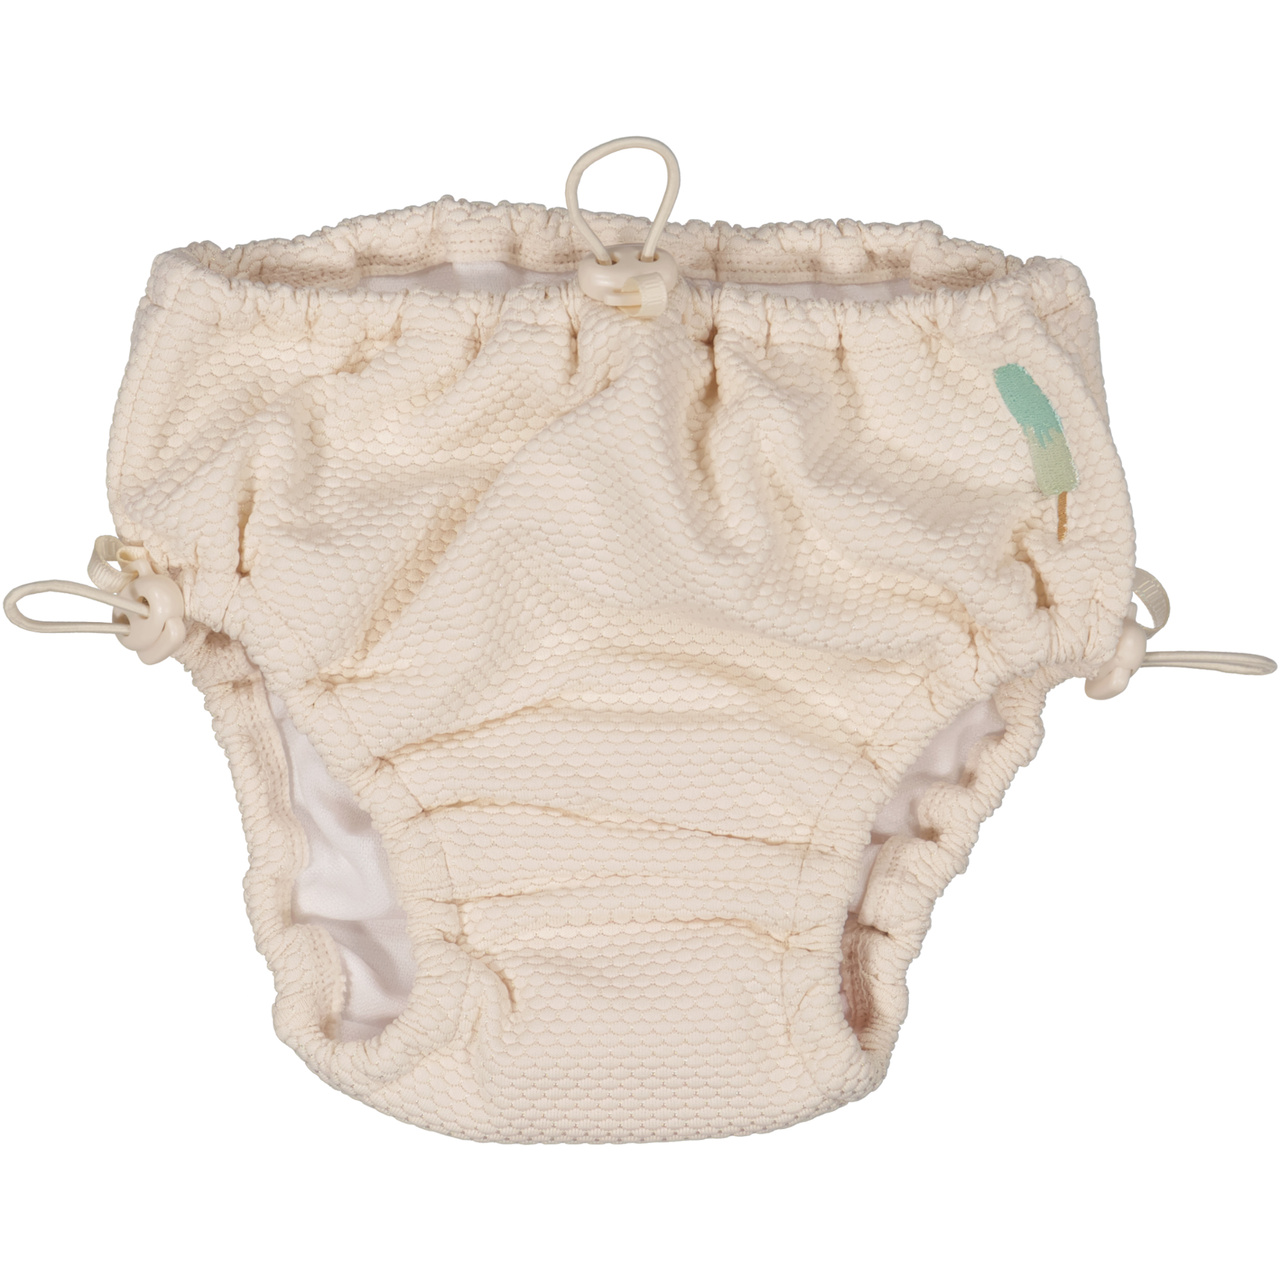 UV Baby swim pants Soft beige  50/56